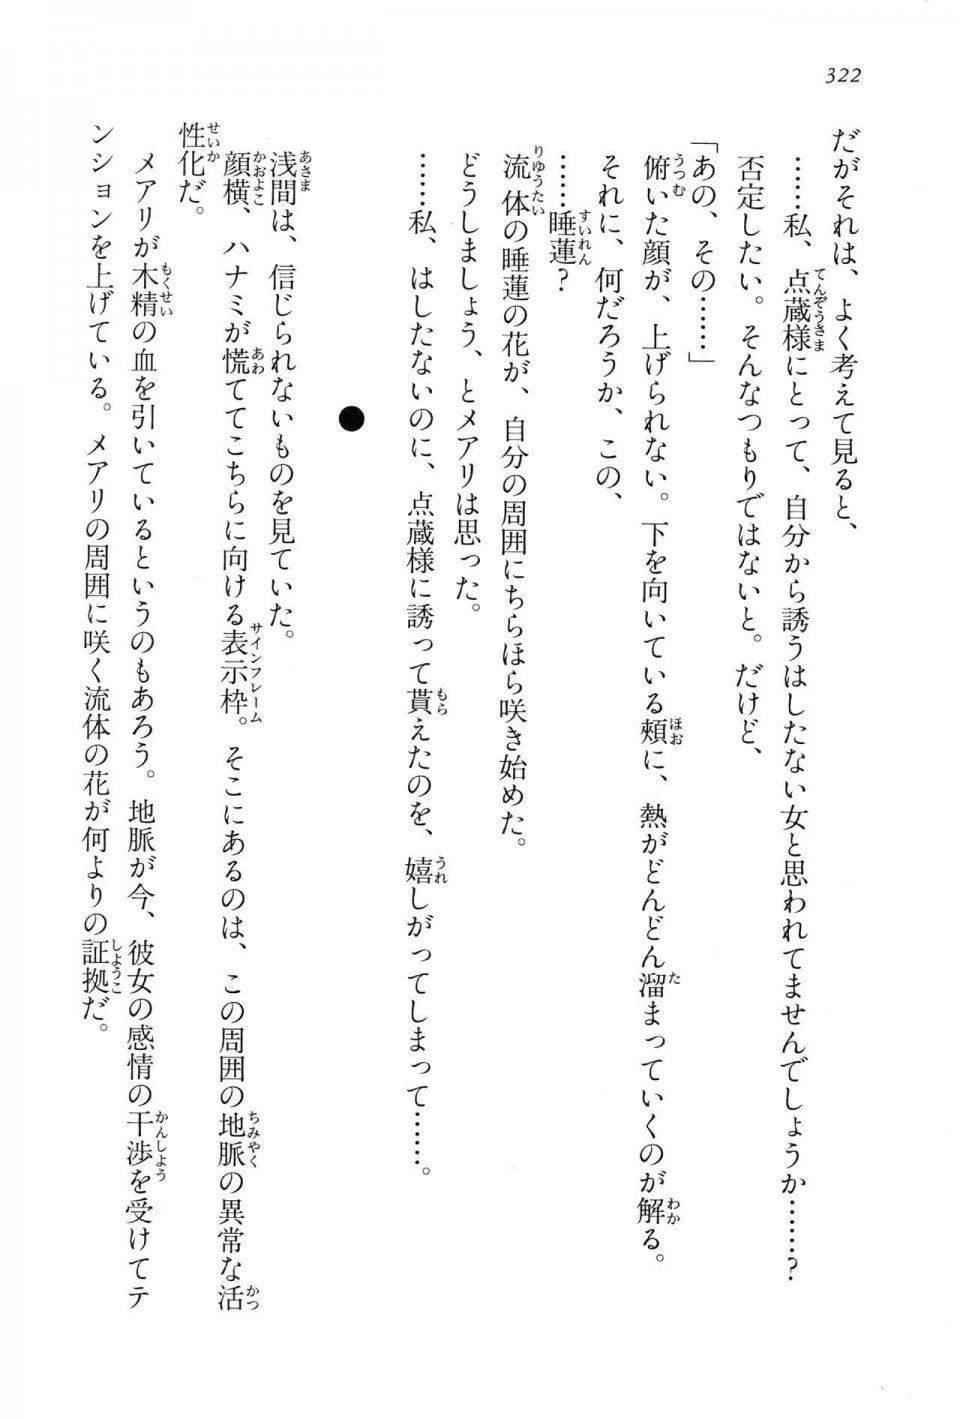 Kyoukai Senjou no Horizon LN Vol 15(6C) Part 1 - Photo #322